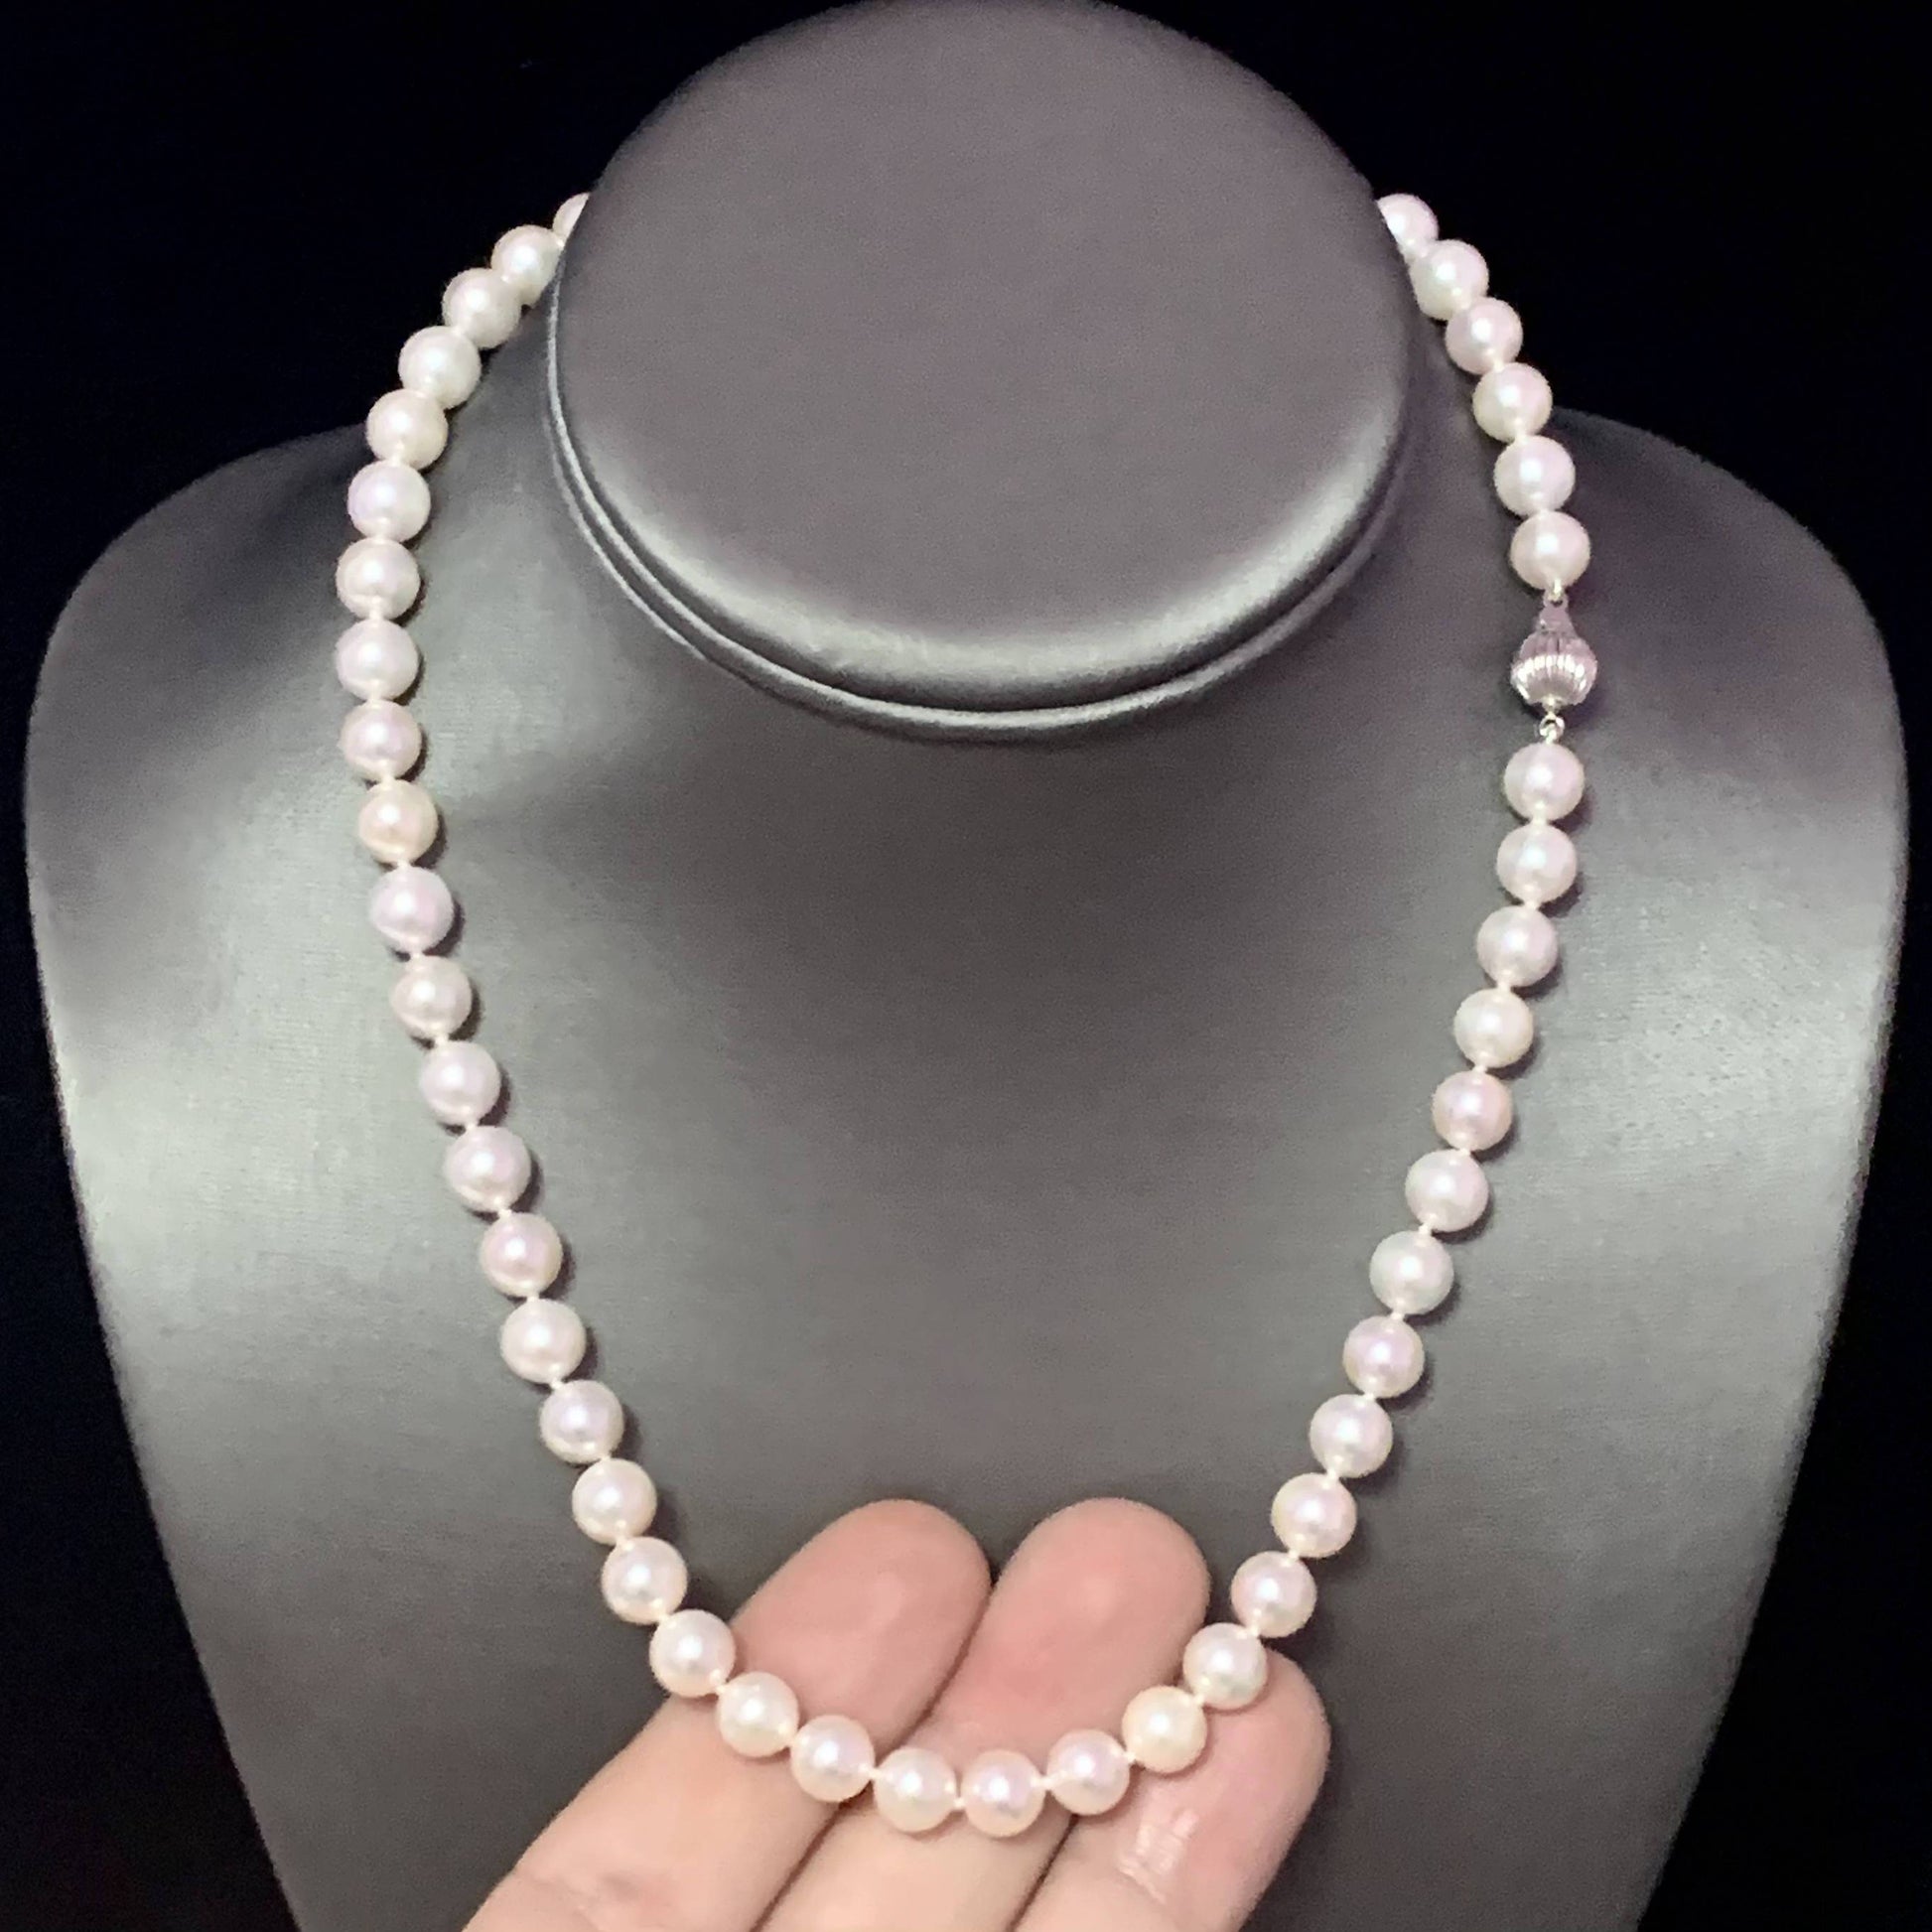 Akoya Pearl Necklace 14k Gold 18" 8.0 mm Certified $3,975 113101 - Certified Estate Jewelry